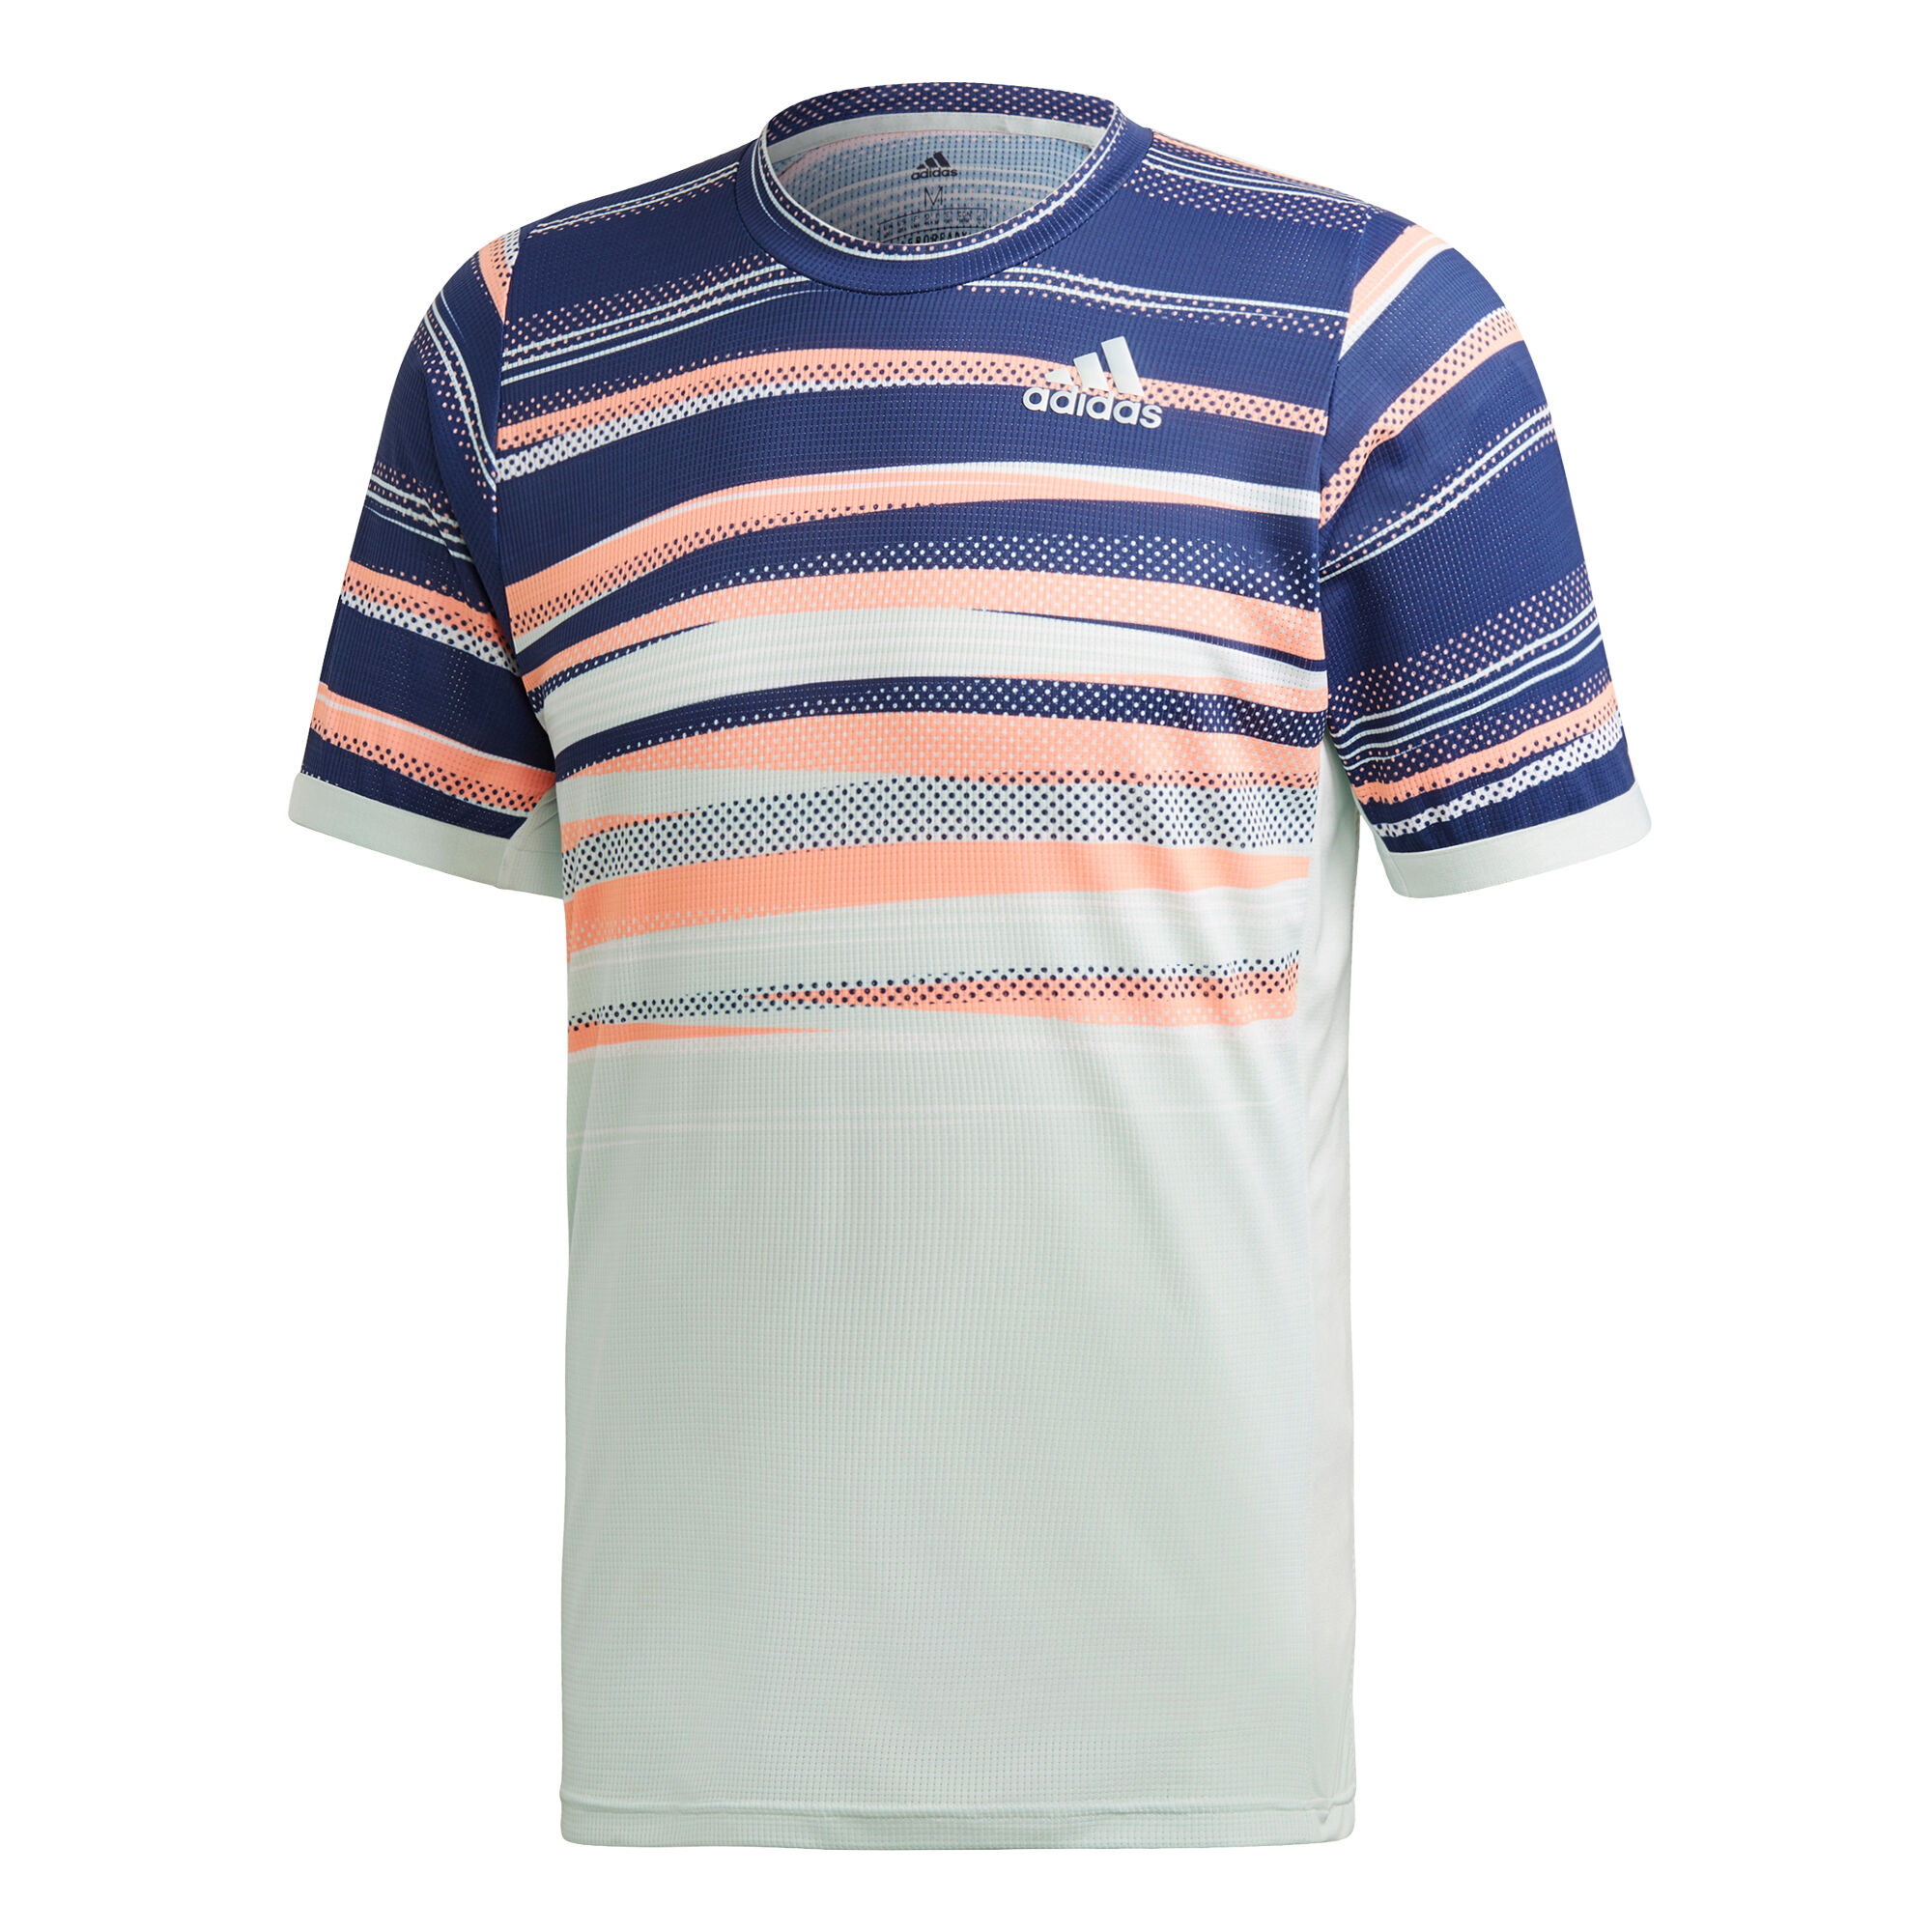 Microbe Basistheorie Plons buy adidas FLFT Heat Ready T-Shirt Men - Mint, Dark Blue online |  Tennis-Point